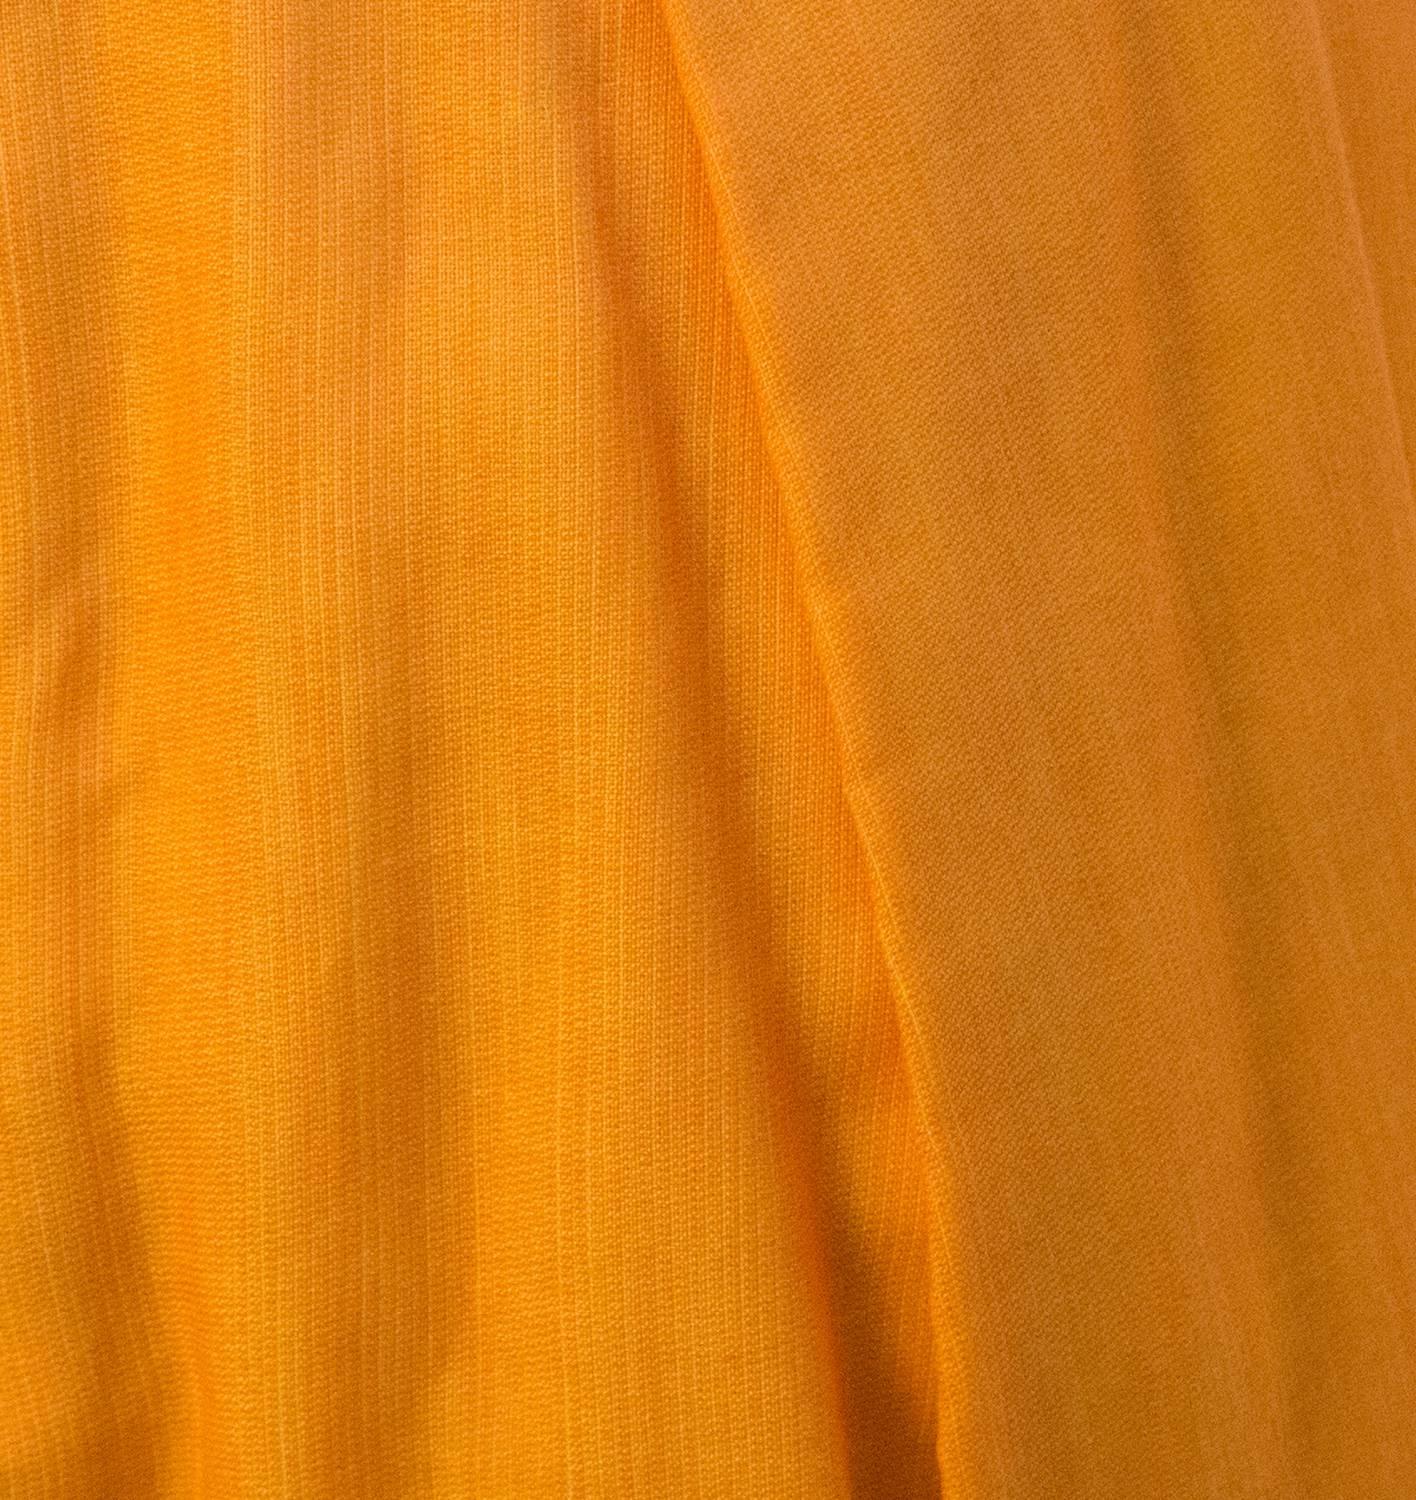 delfi orange and gold dress